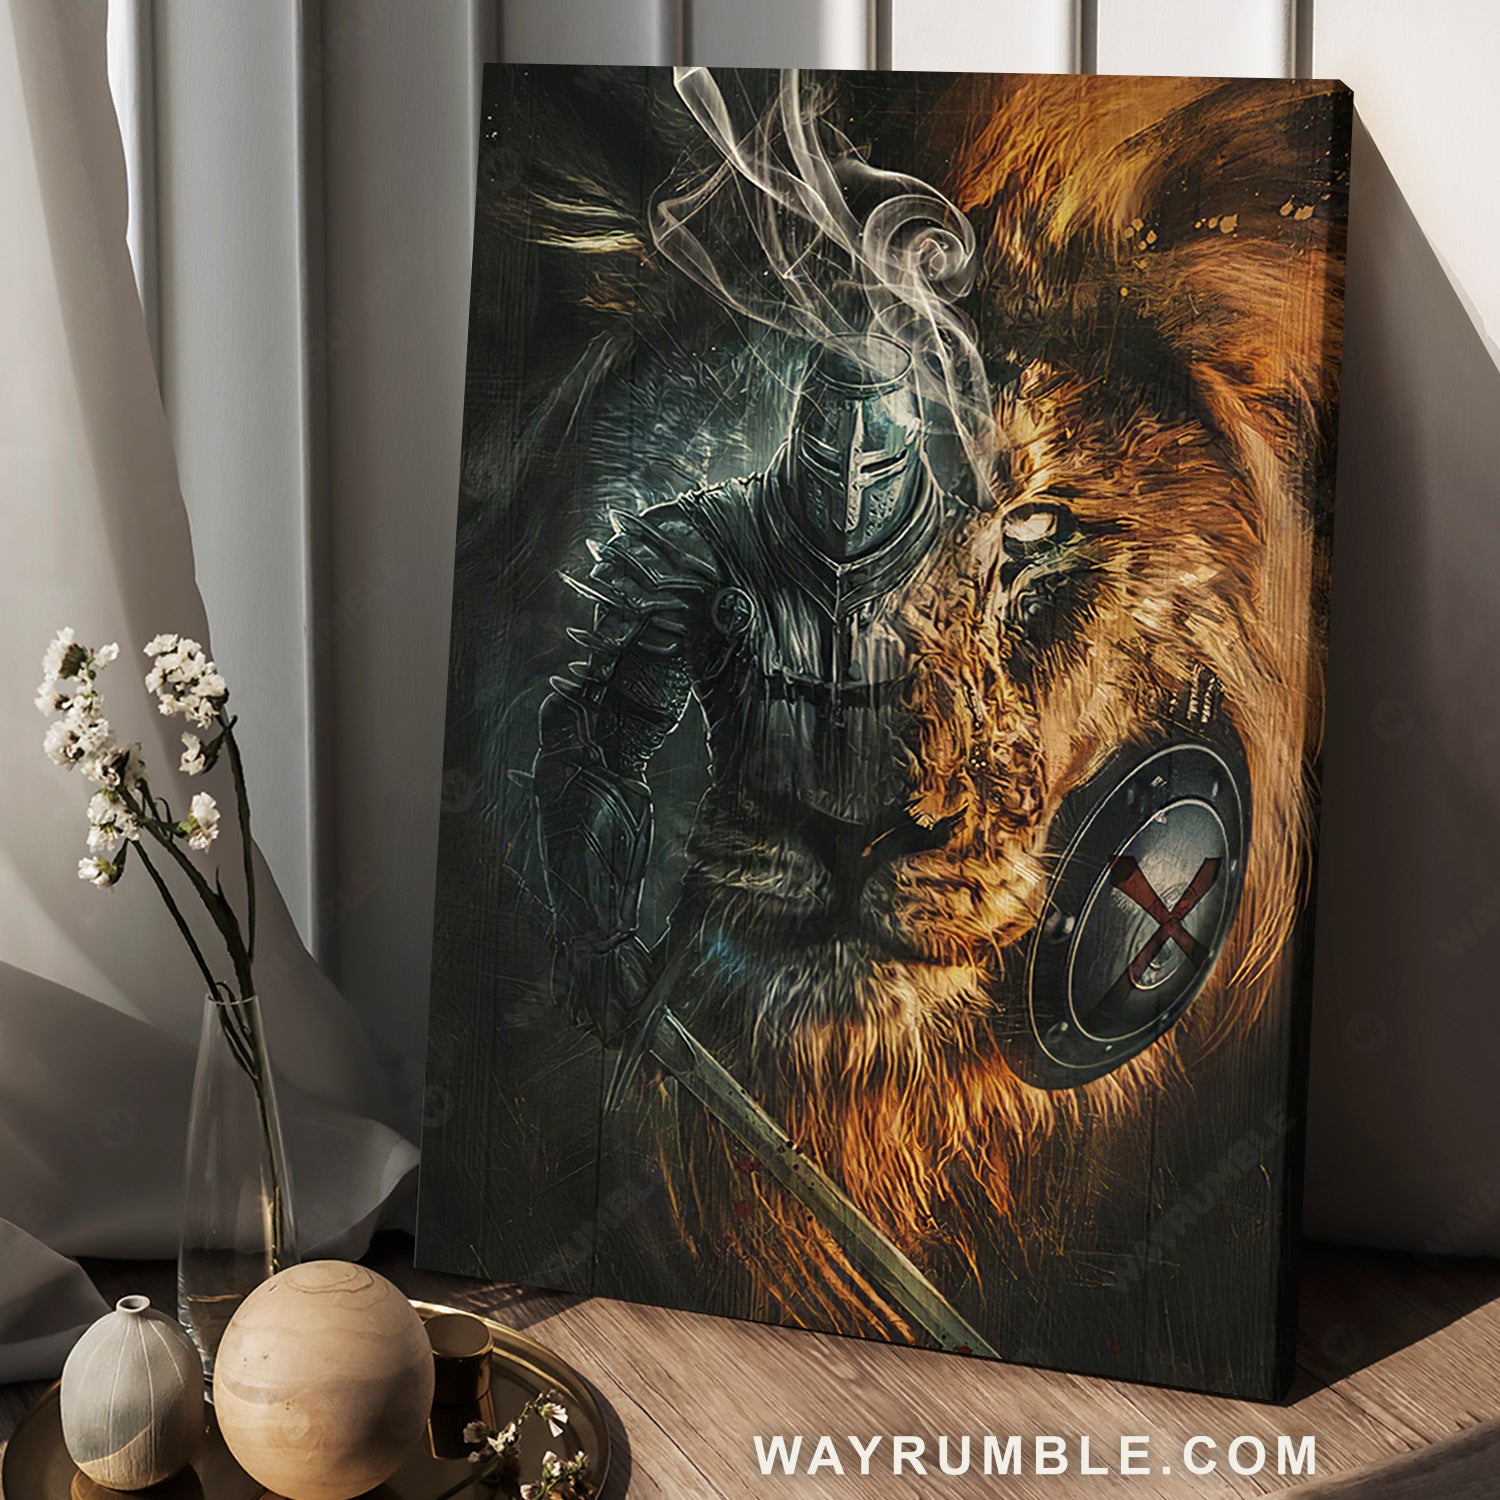 Jesus Christ, Lion of Judah, Awesome warrior - Jesus Portrait Canvas Prints, Wall Art